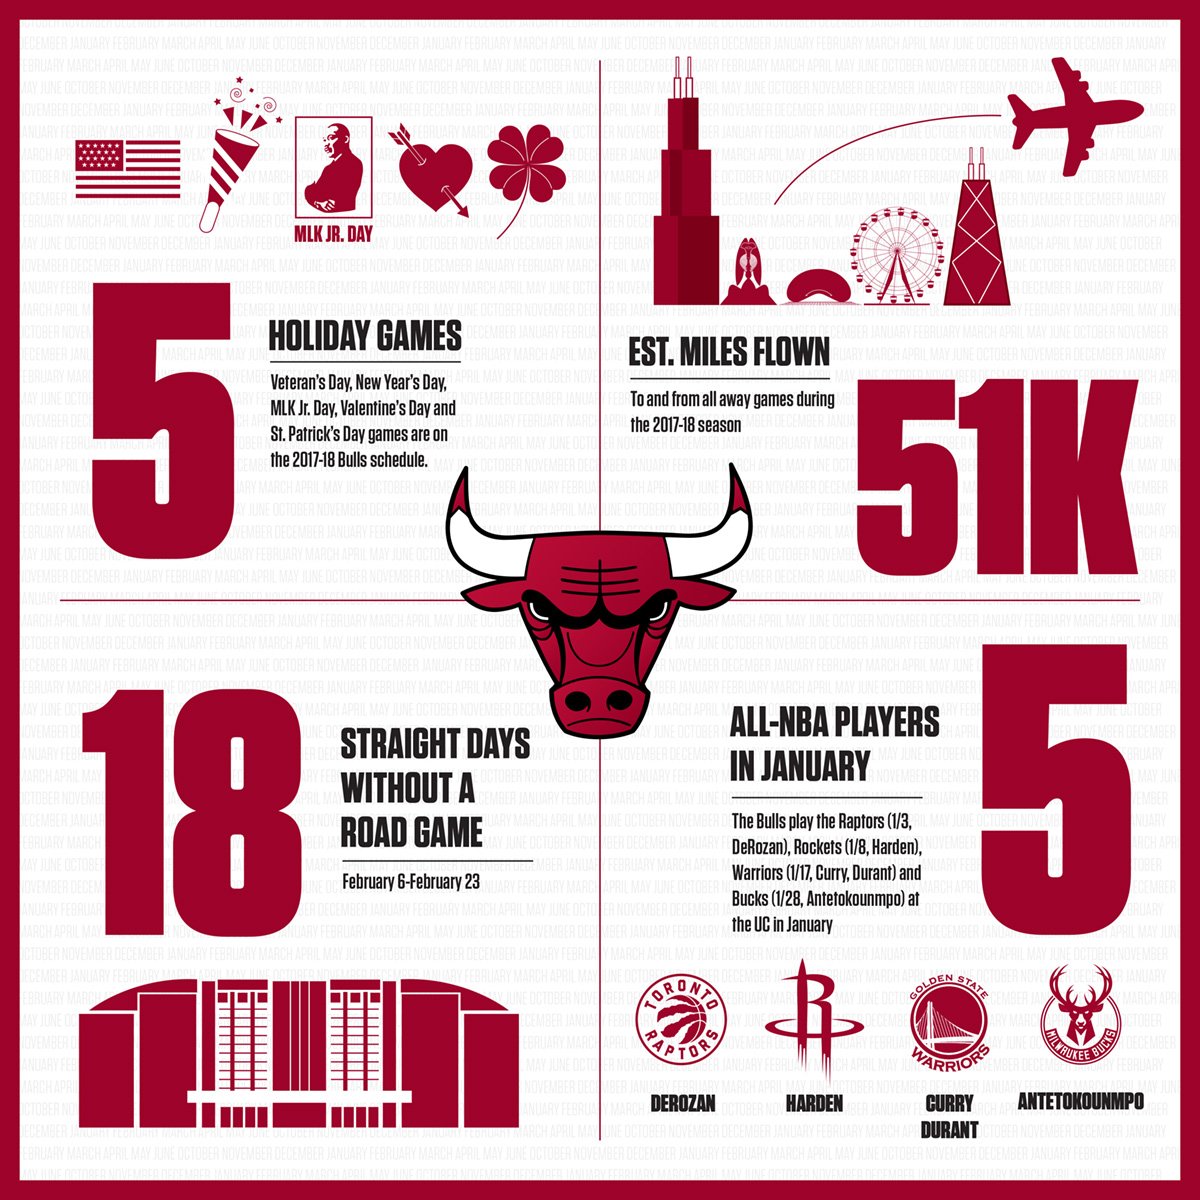 OFFICIAL #Bulls 2017-18 regular season schedule: Bulls.com/Schedule  👀 Some fun facts for this season 👇 https://t.co/pHugSpq2Cc